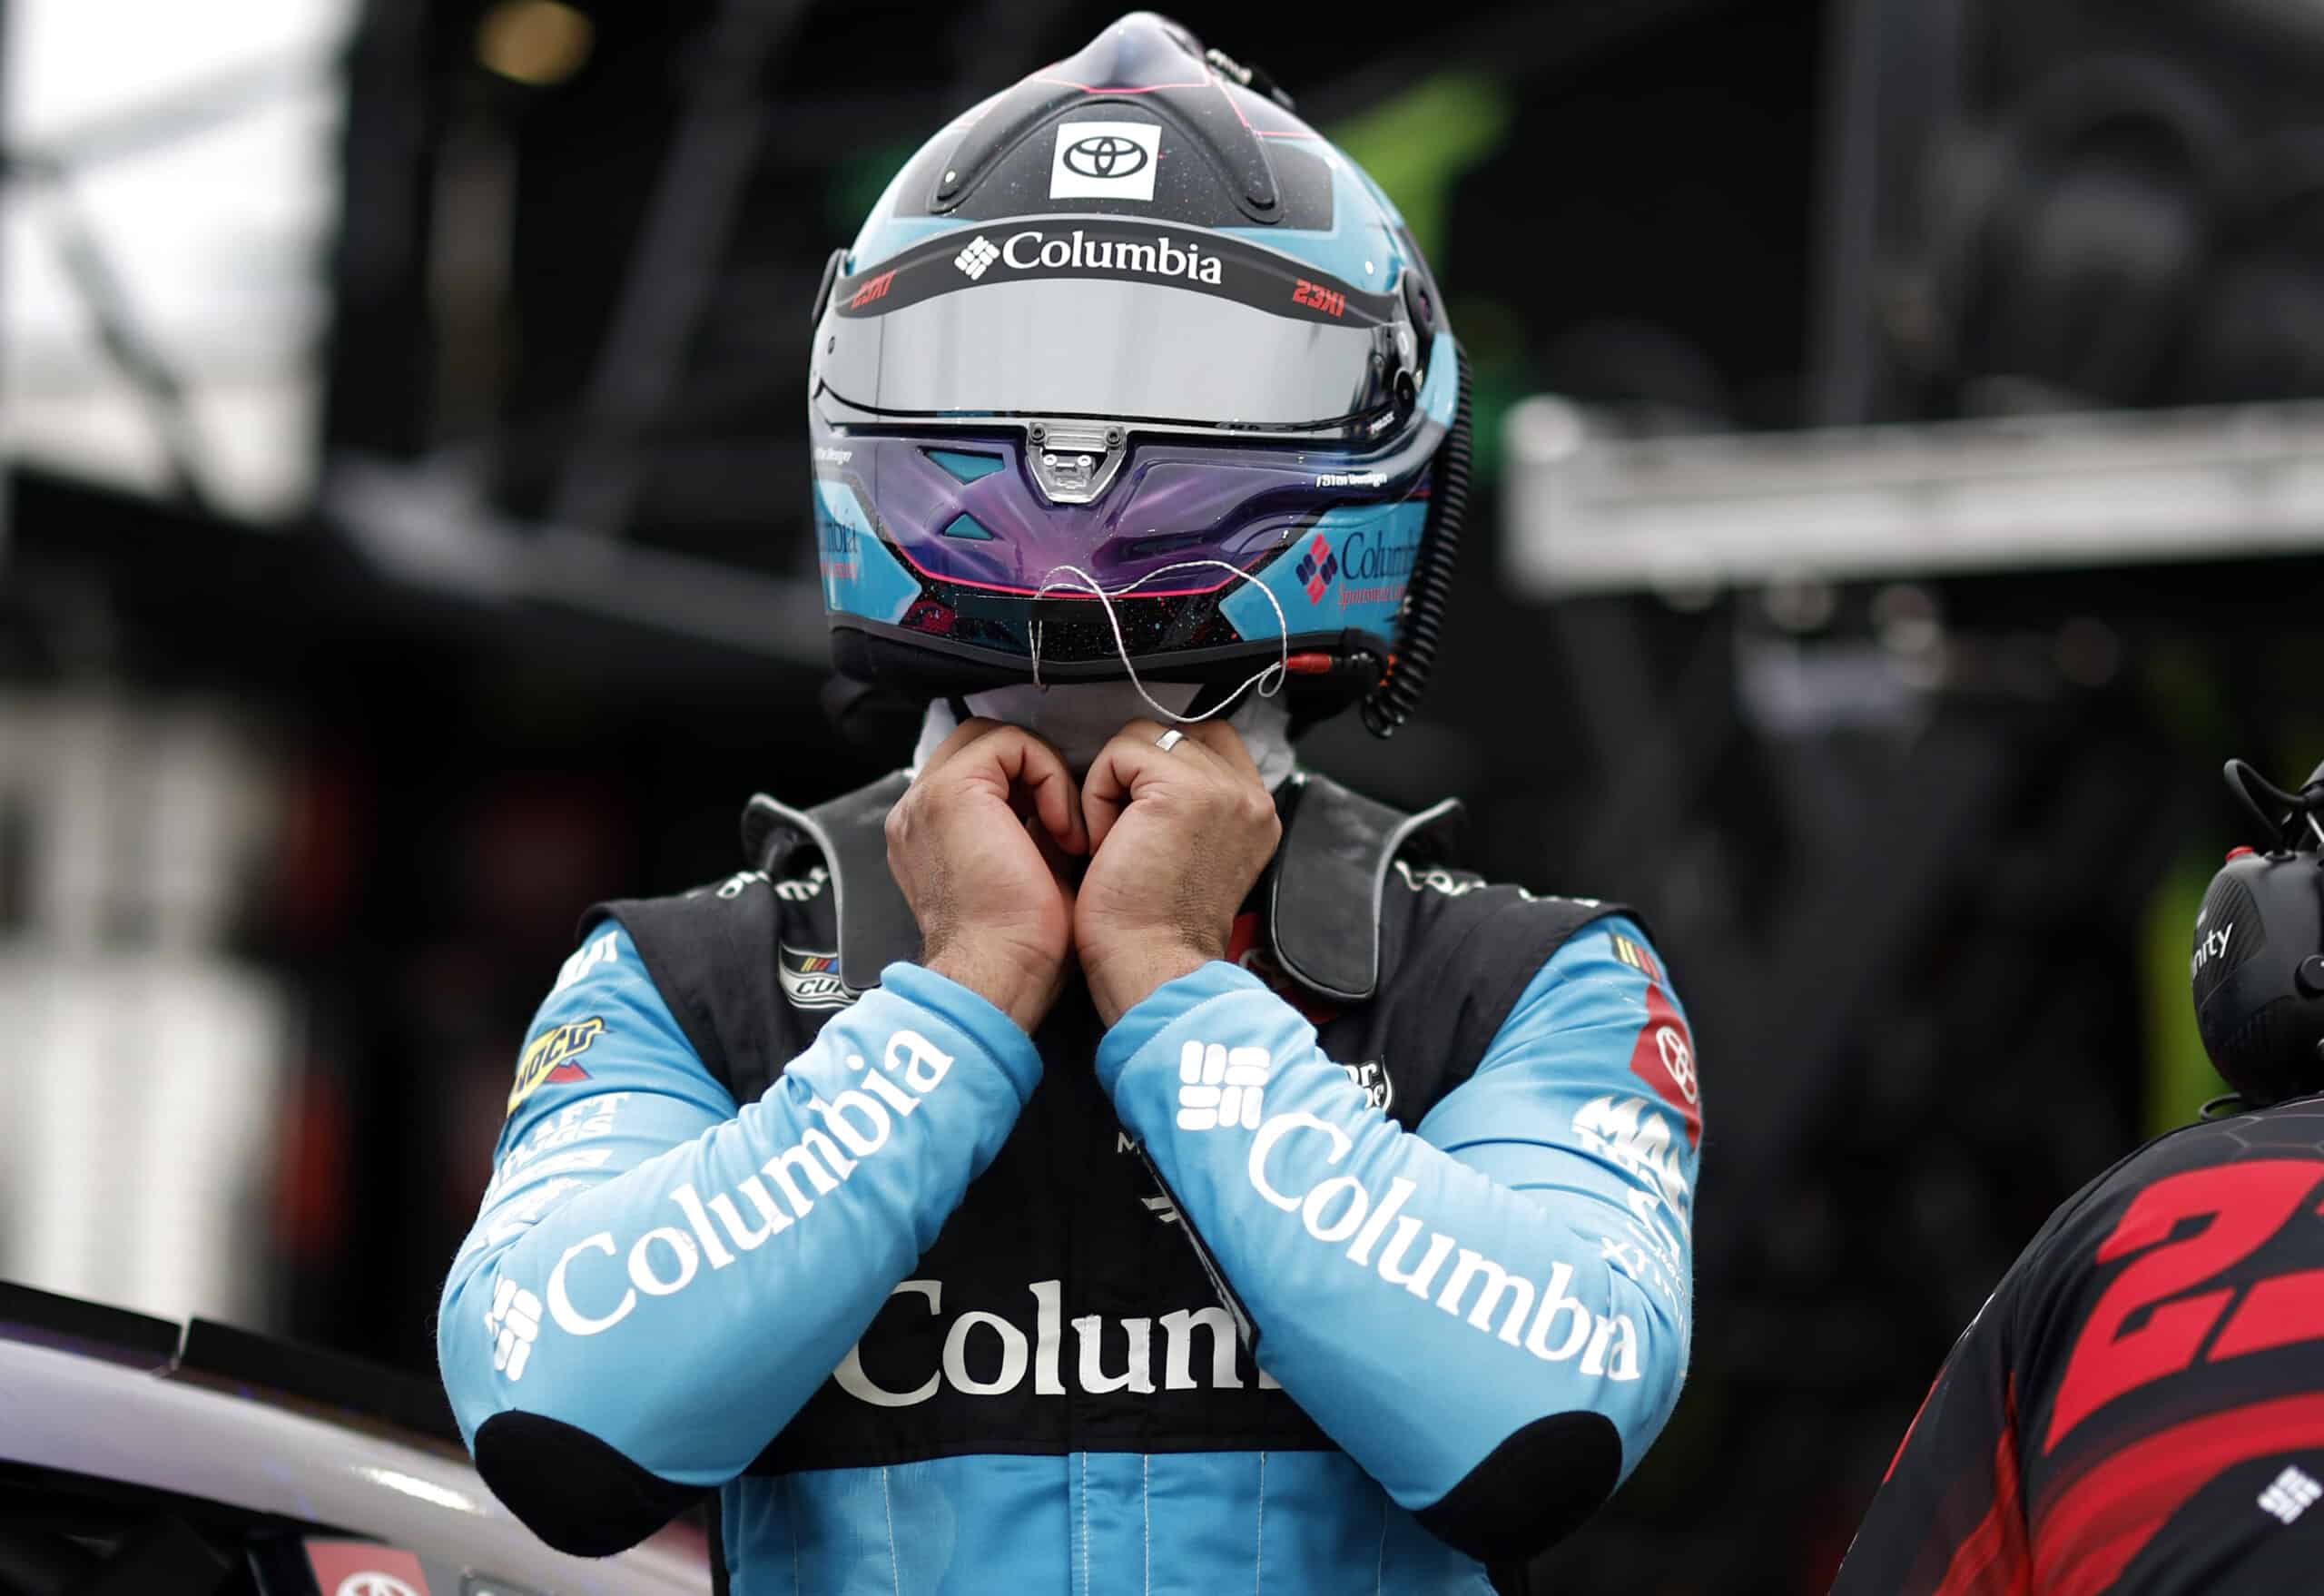 Race car driver Bubba Wallace sports his Columbia sponsorship.